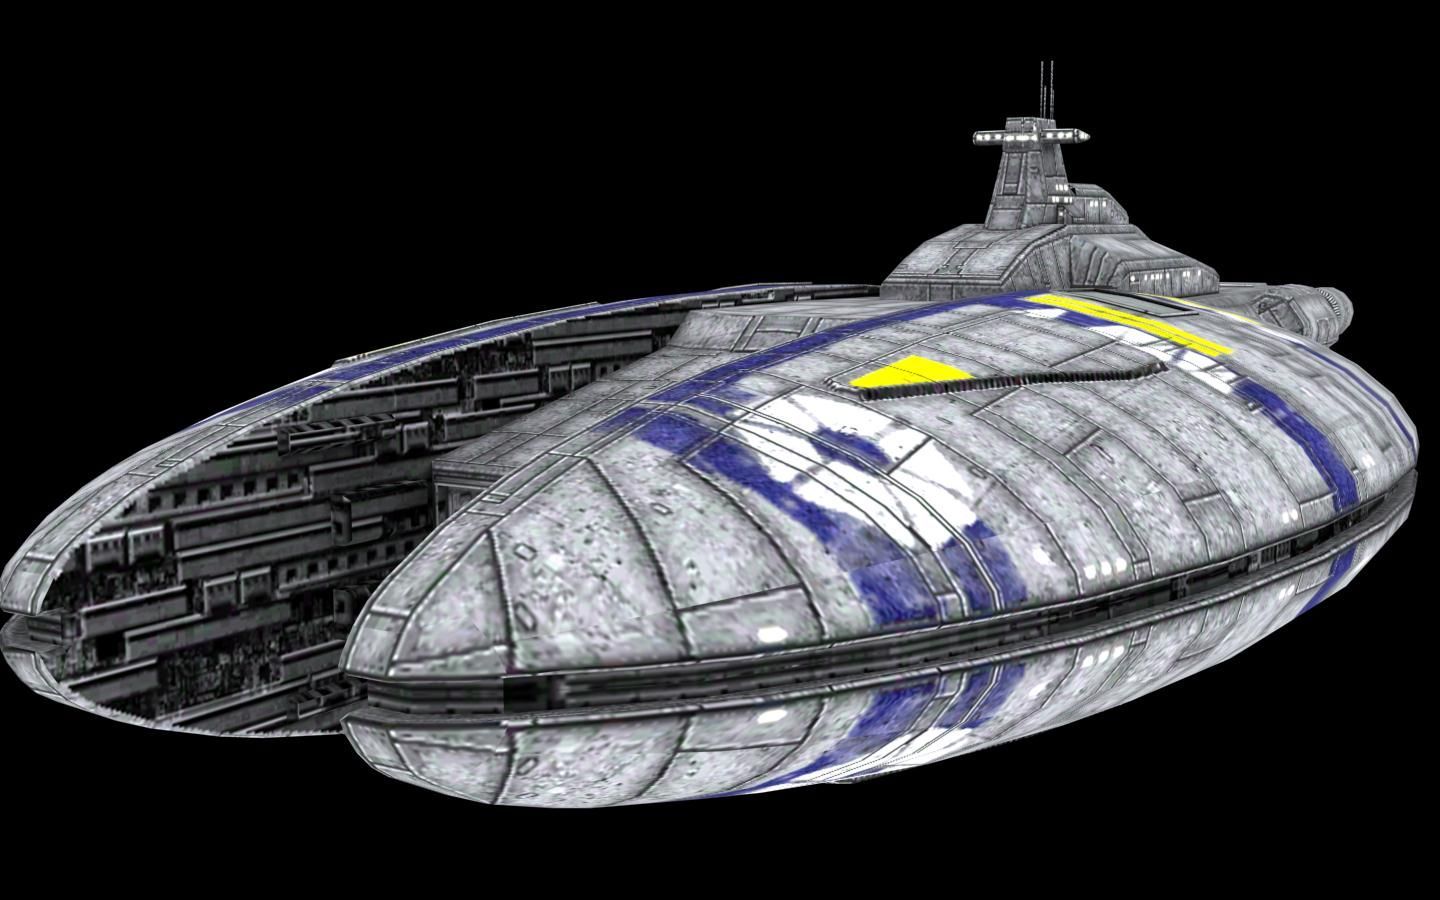 Separatists Carrier. Star wars bb Star wars ships, Star wars vehicles